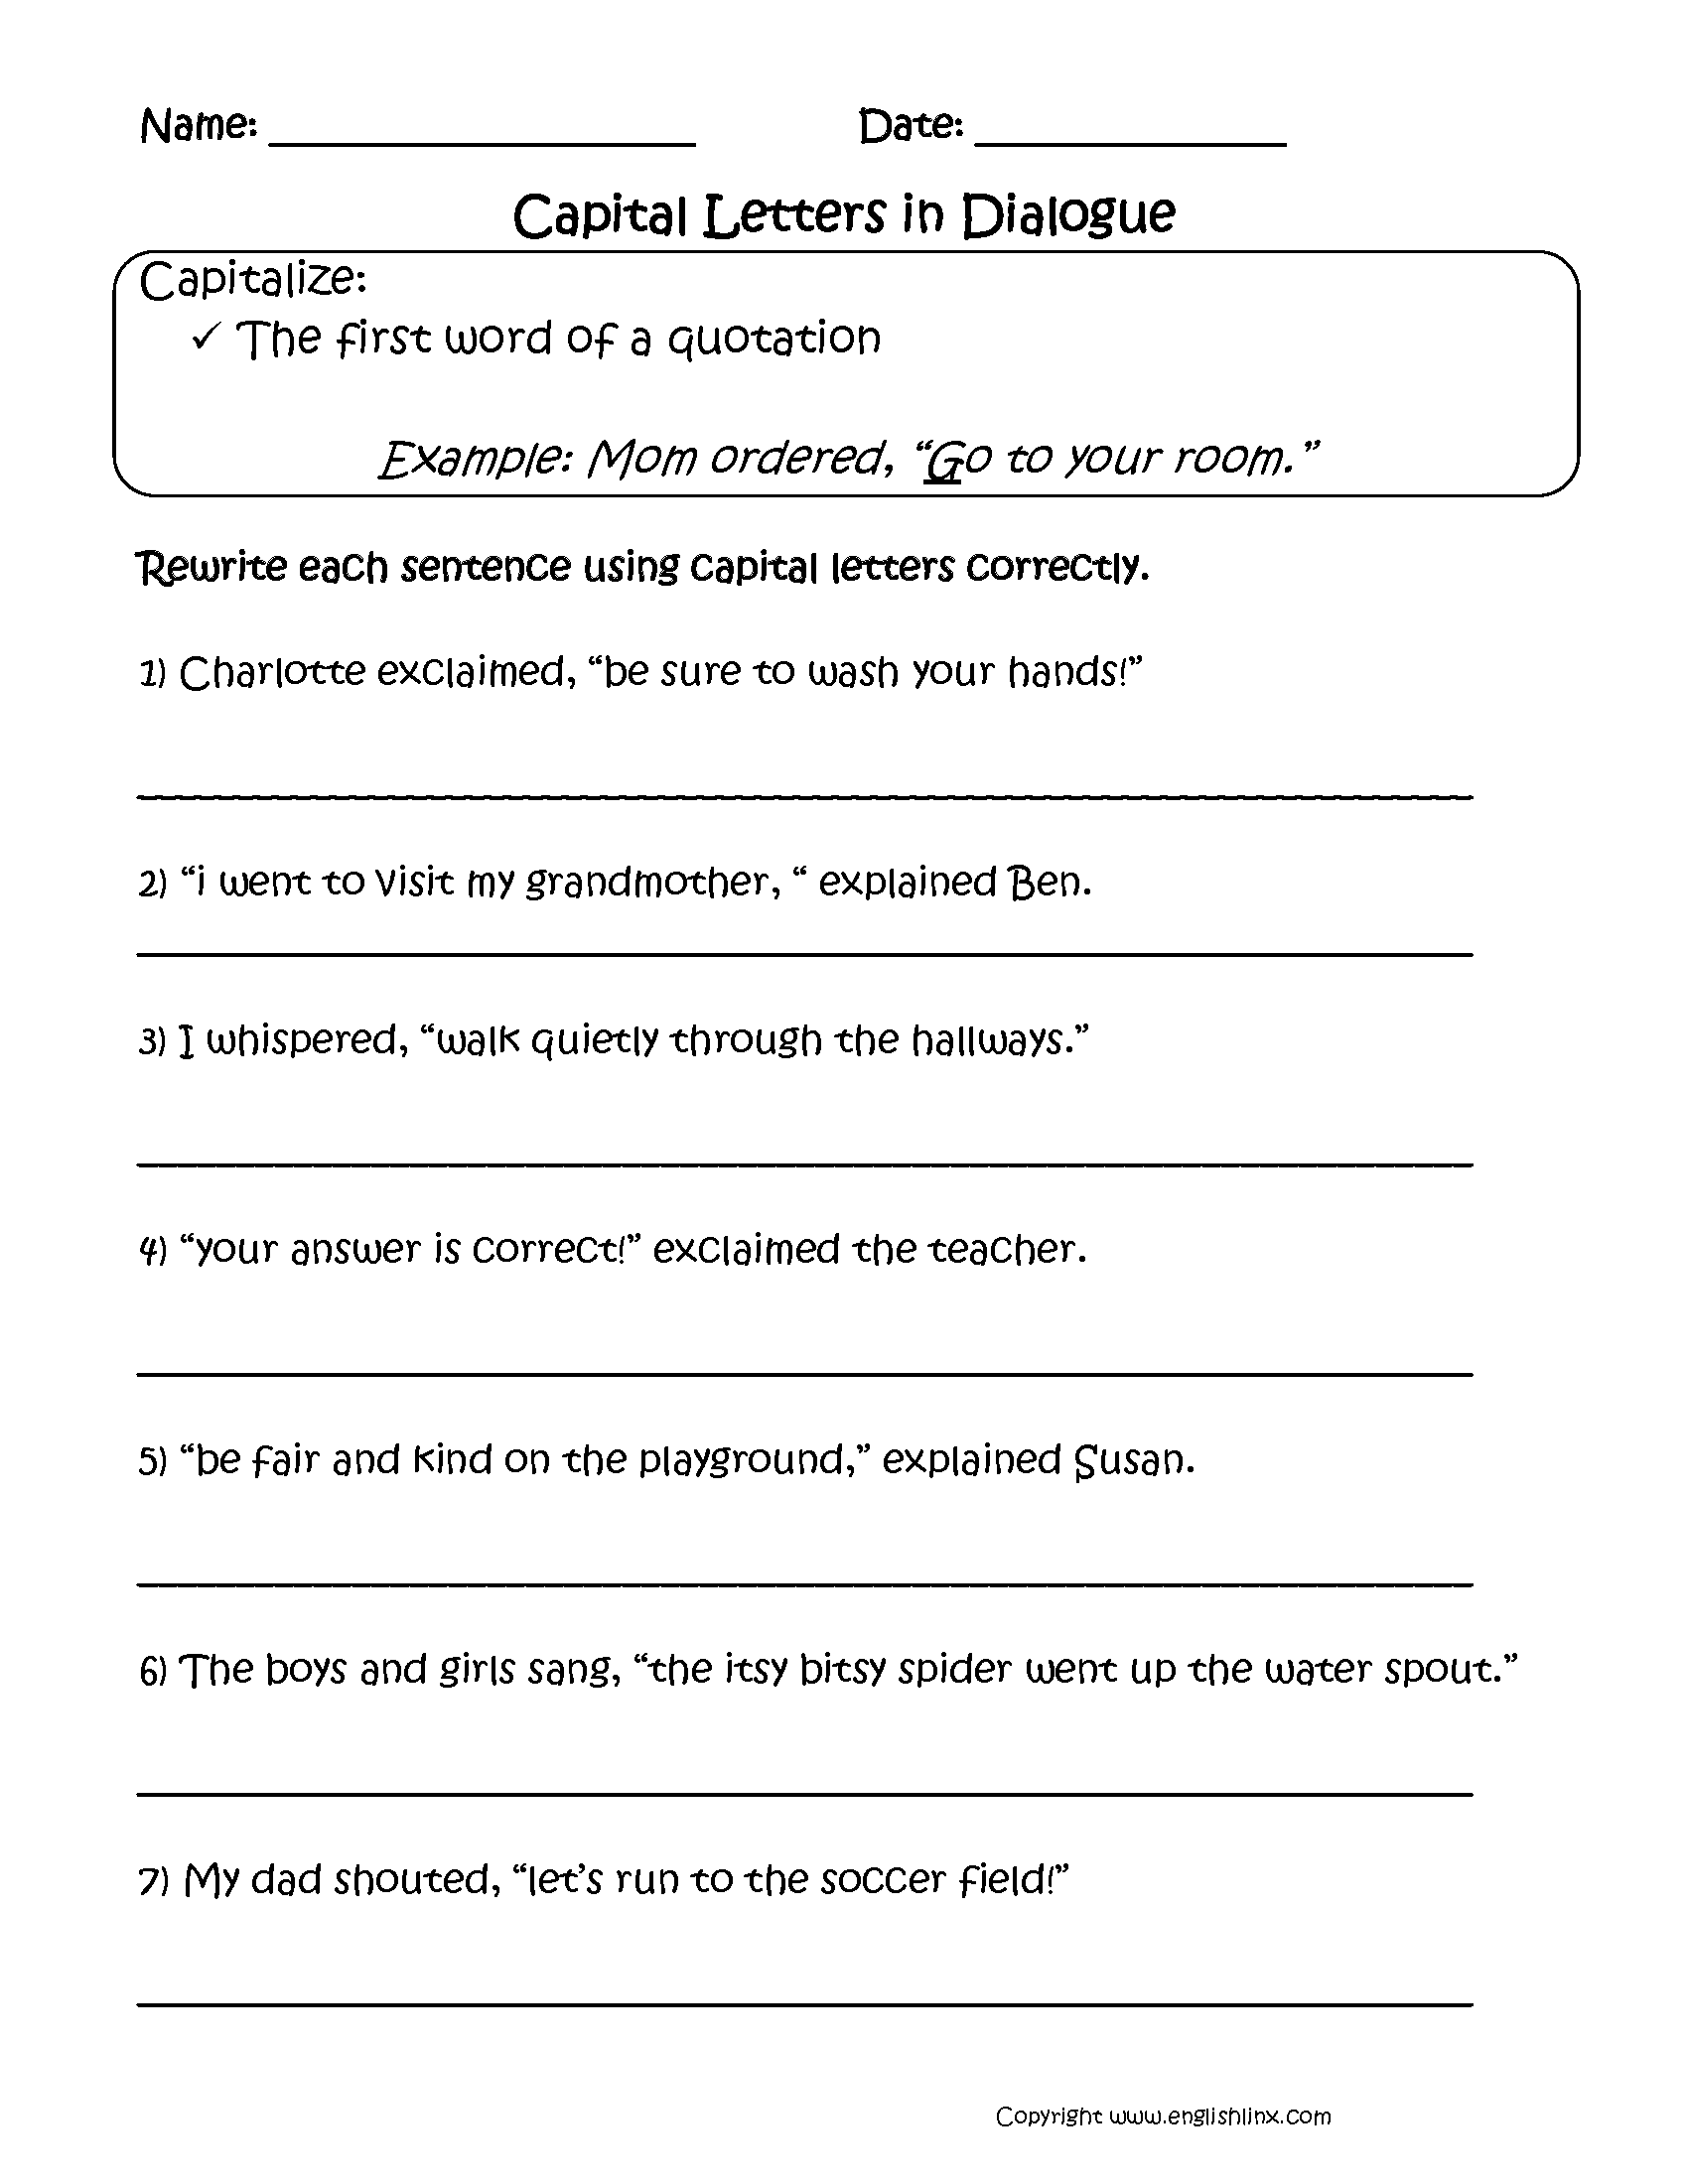 Spelling homework worksheets